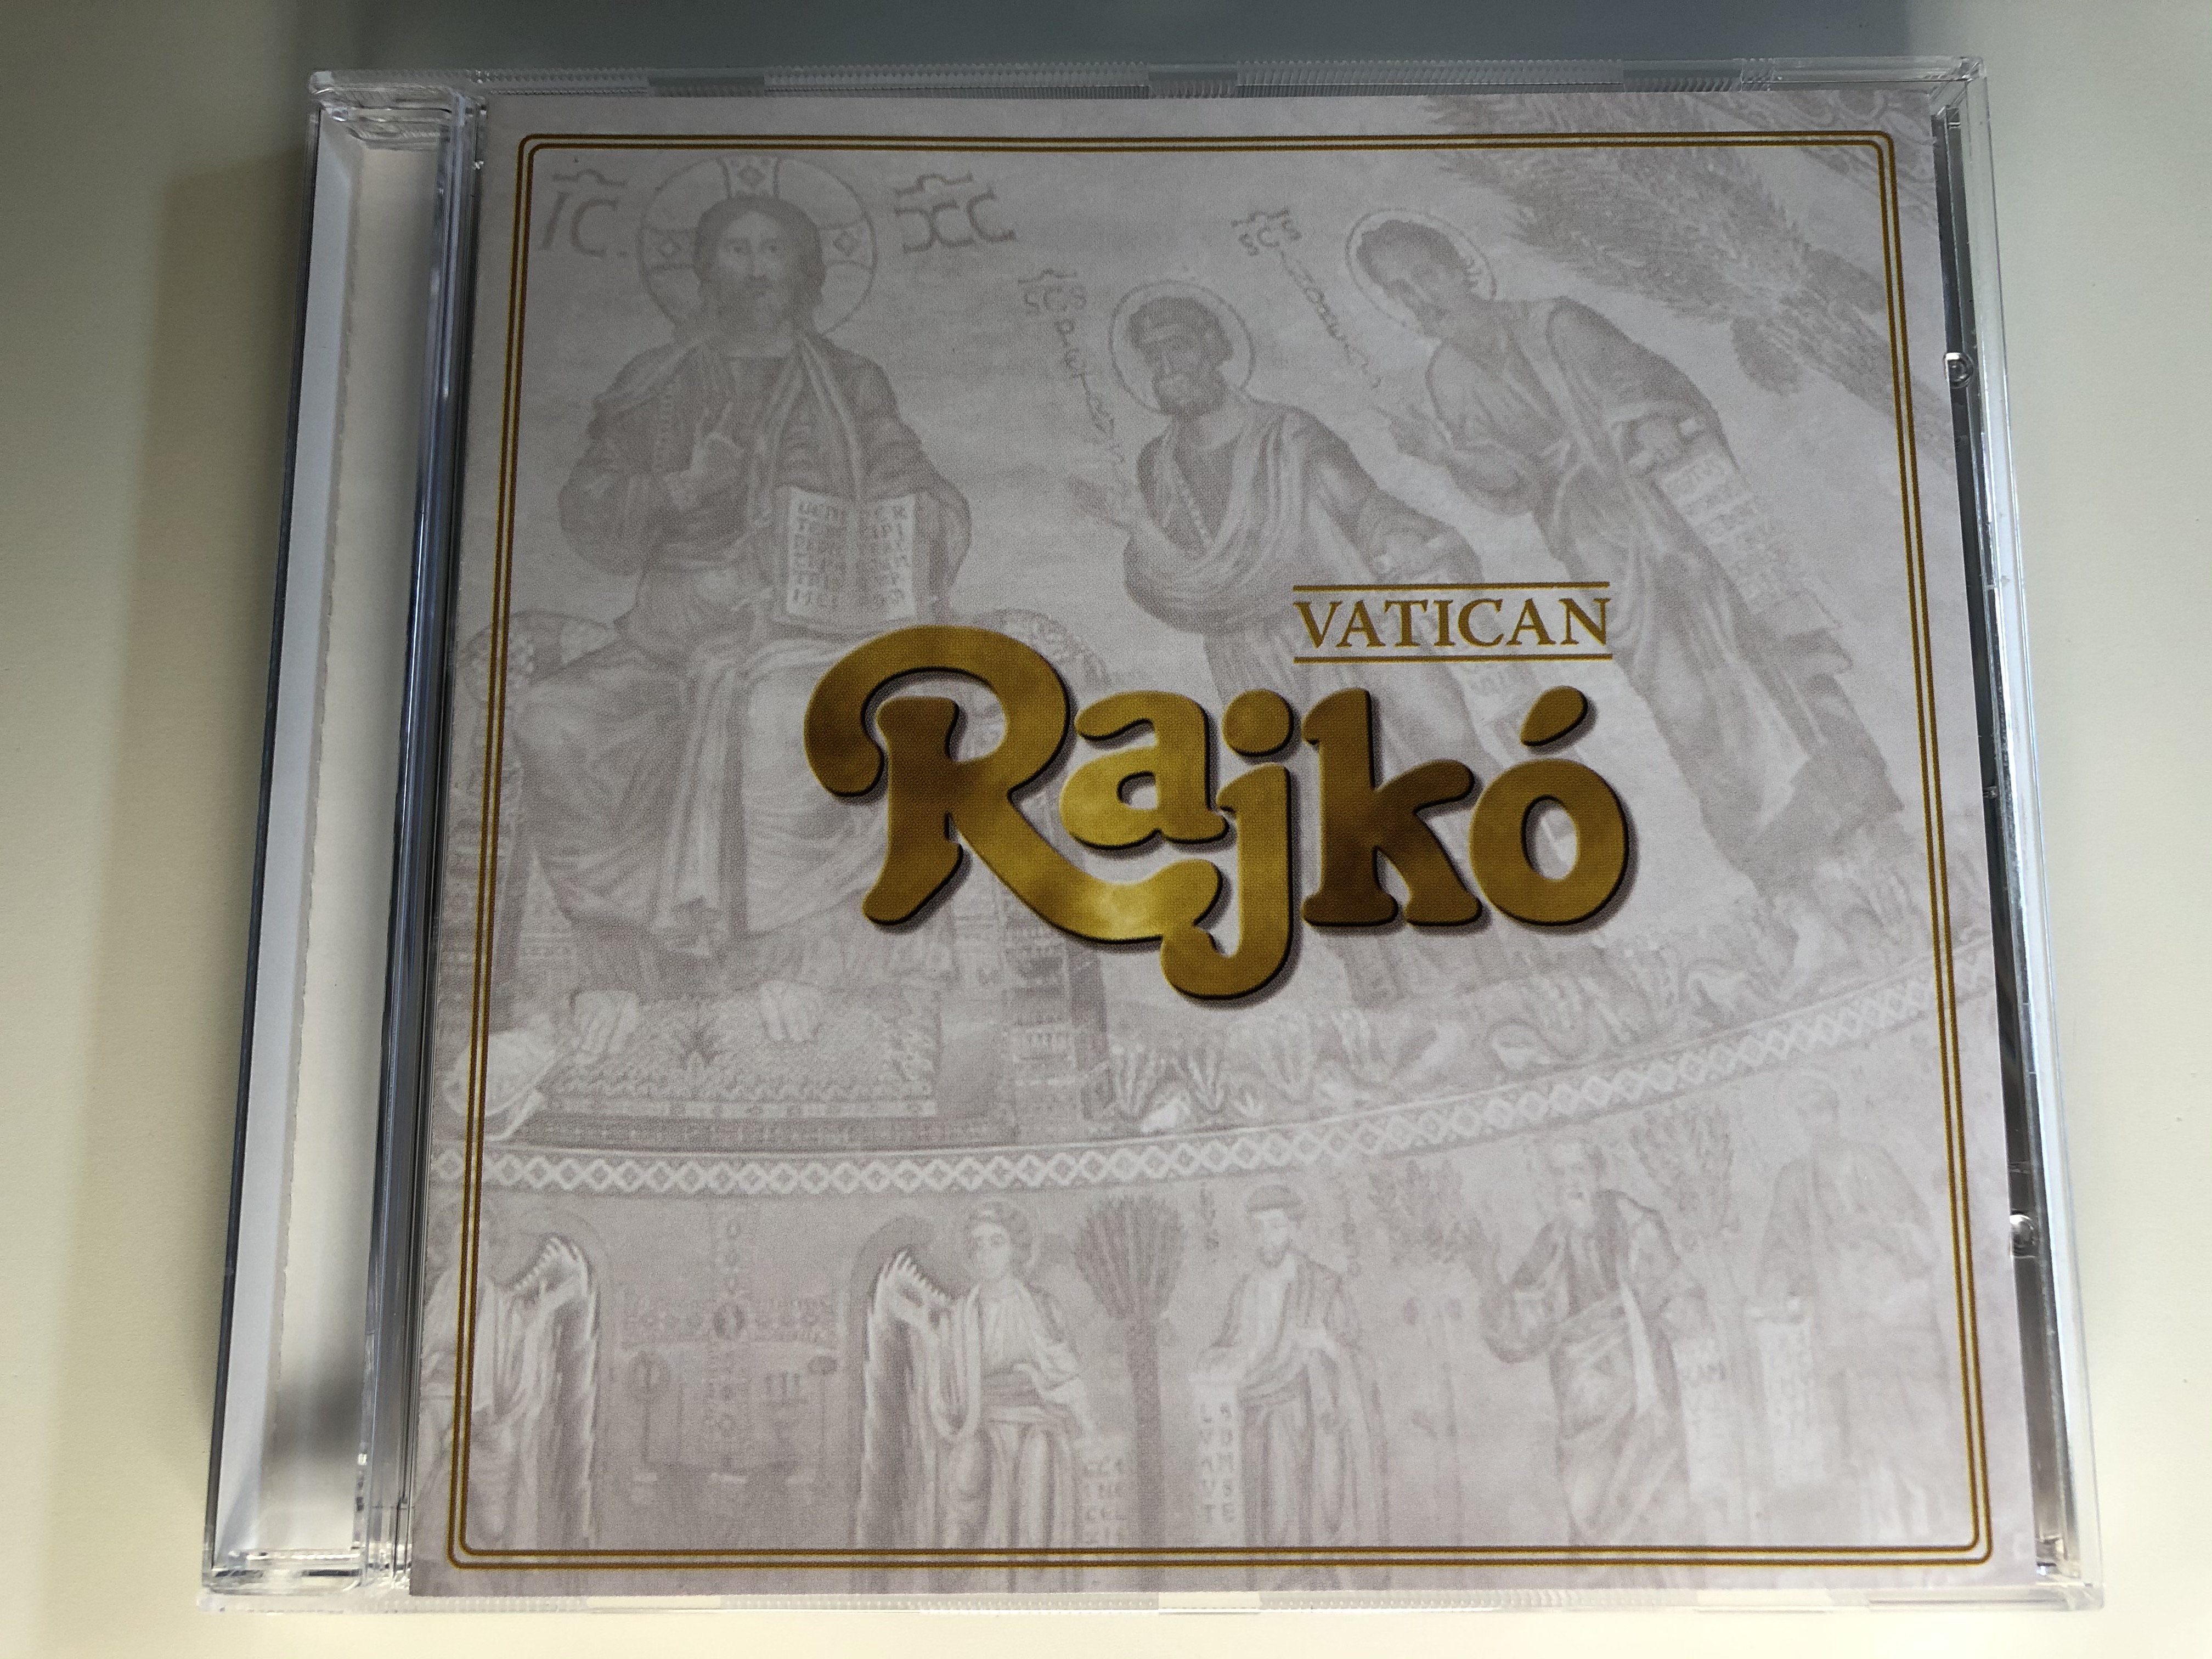 vatican-rajko-r.o.m.a.-audio-cd-2011-tkfcd61-1-.jpg